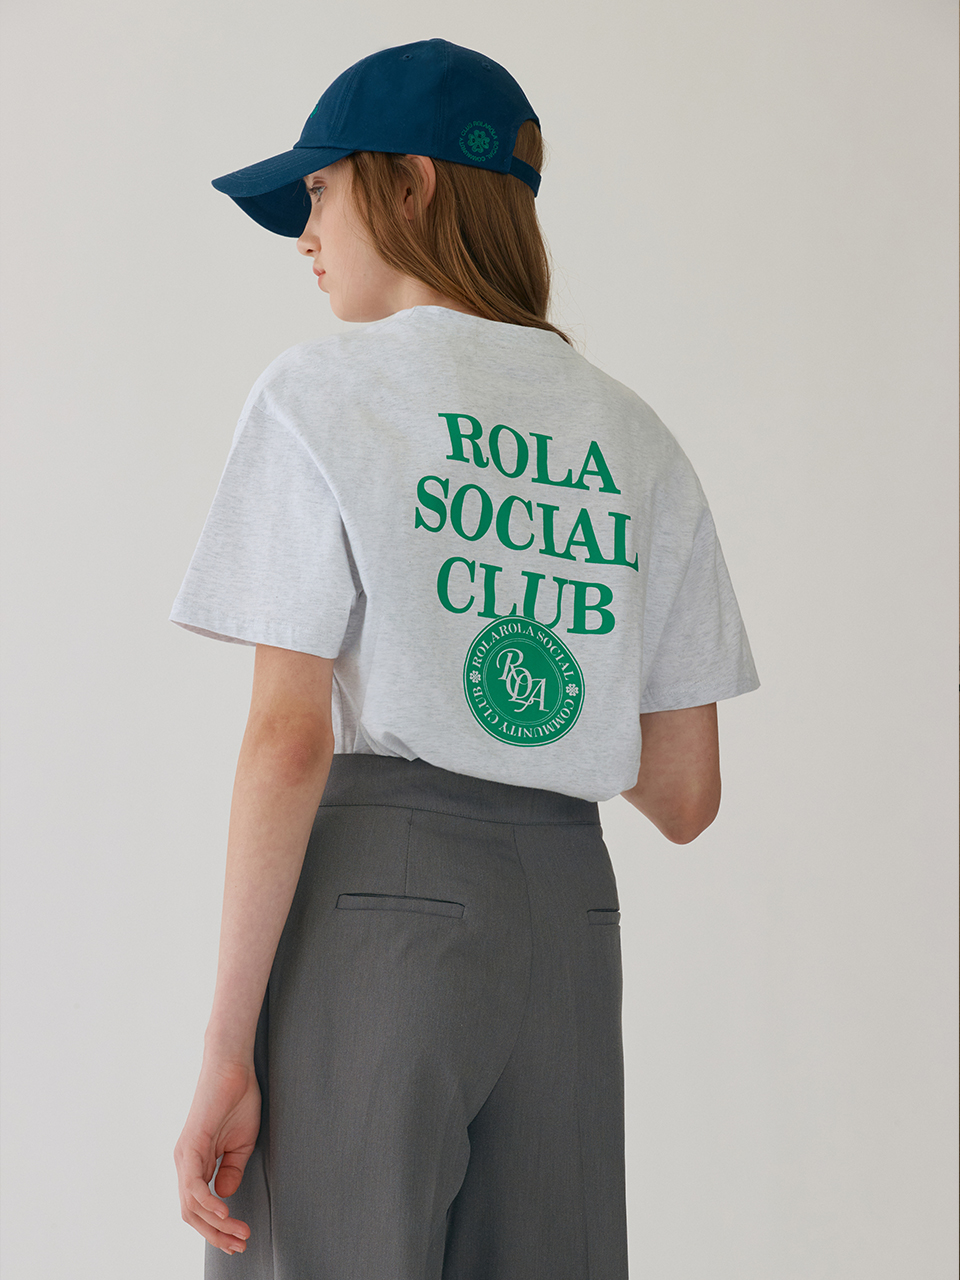 ROLA SOCIAL CLUB T-SHIRT LIGHT GRAY